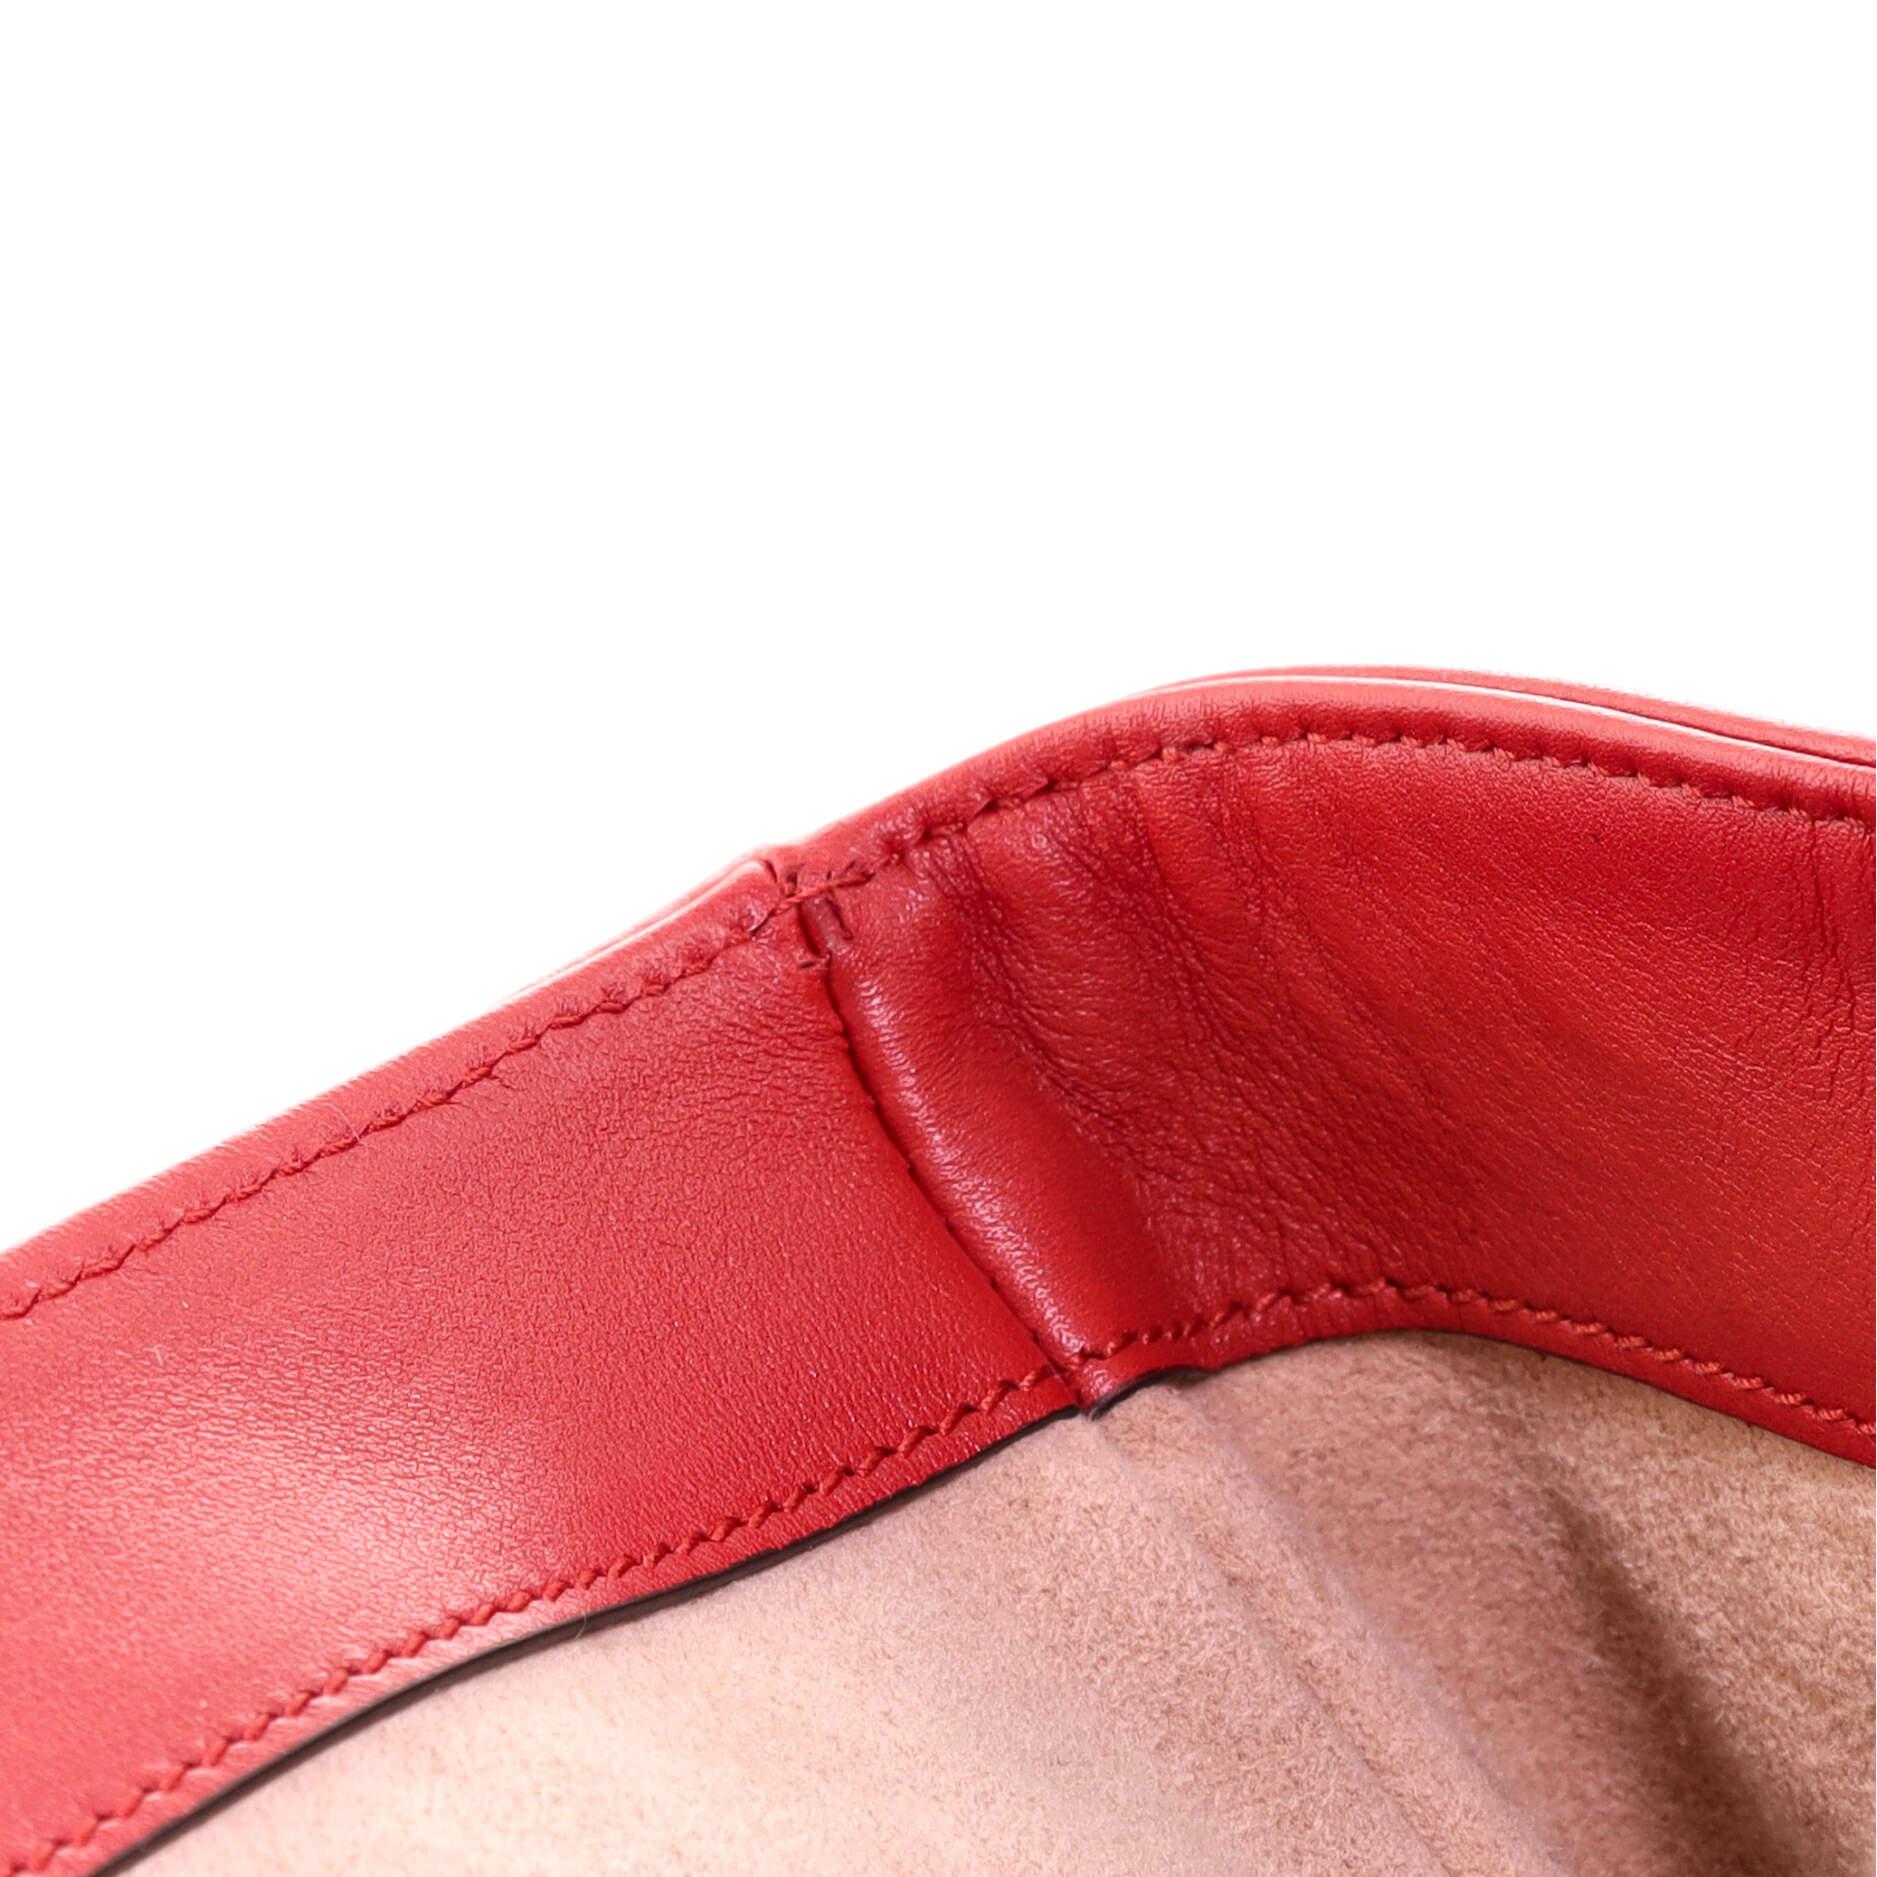 Women's or Men's Gucci Queen Margaret Top Handle Bag Quilted Leather Medium